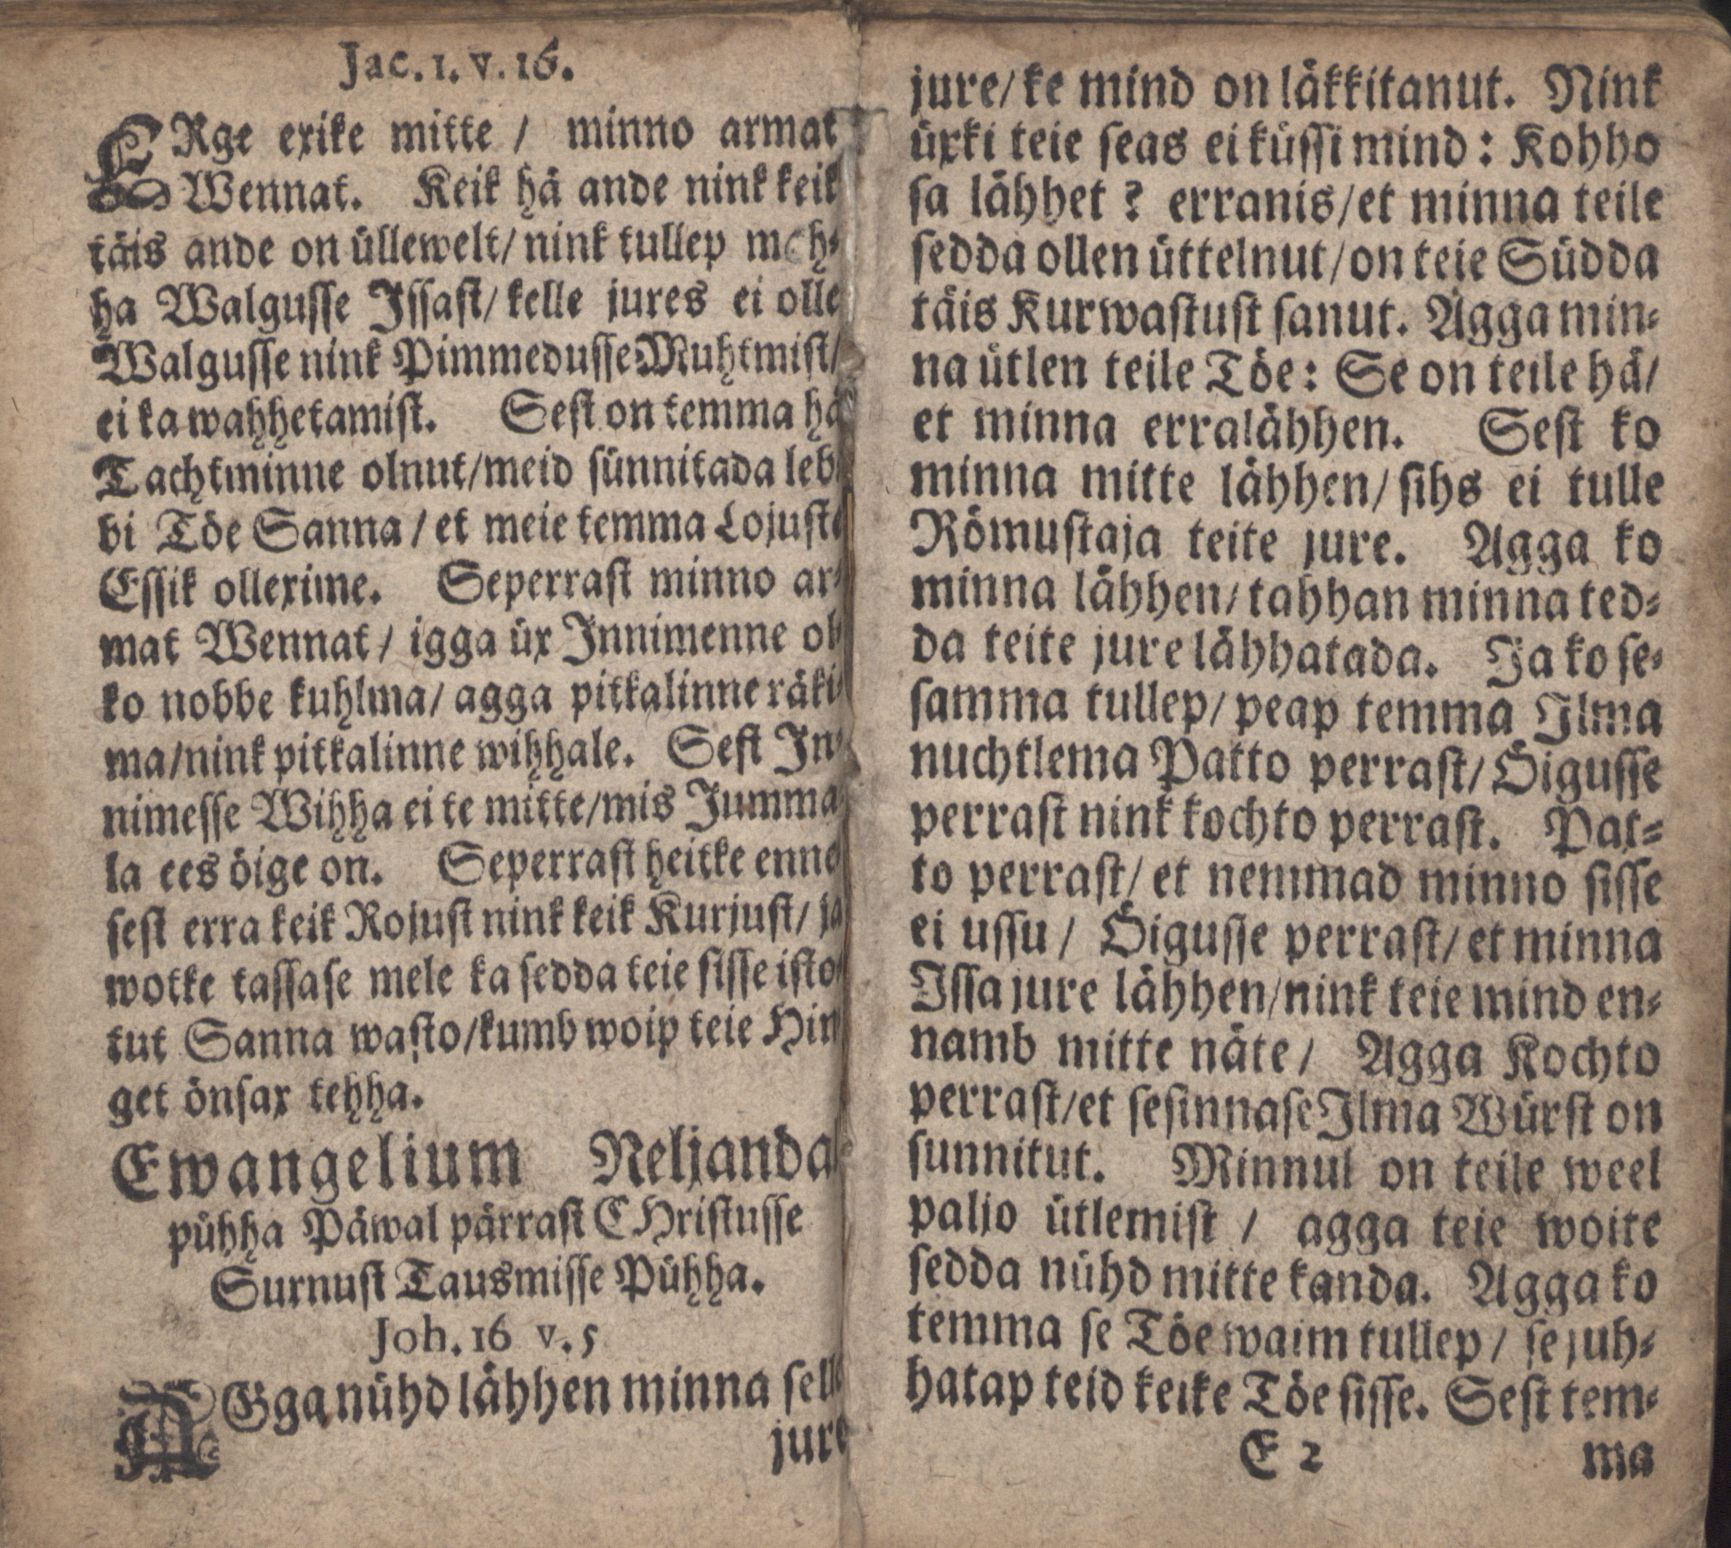 Ma Kele Koddo- nink Kirko-Ramat (1700) | 95. Main body of text